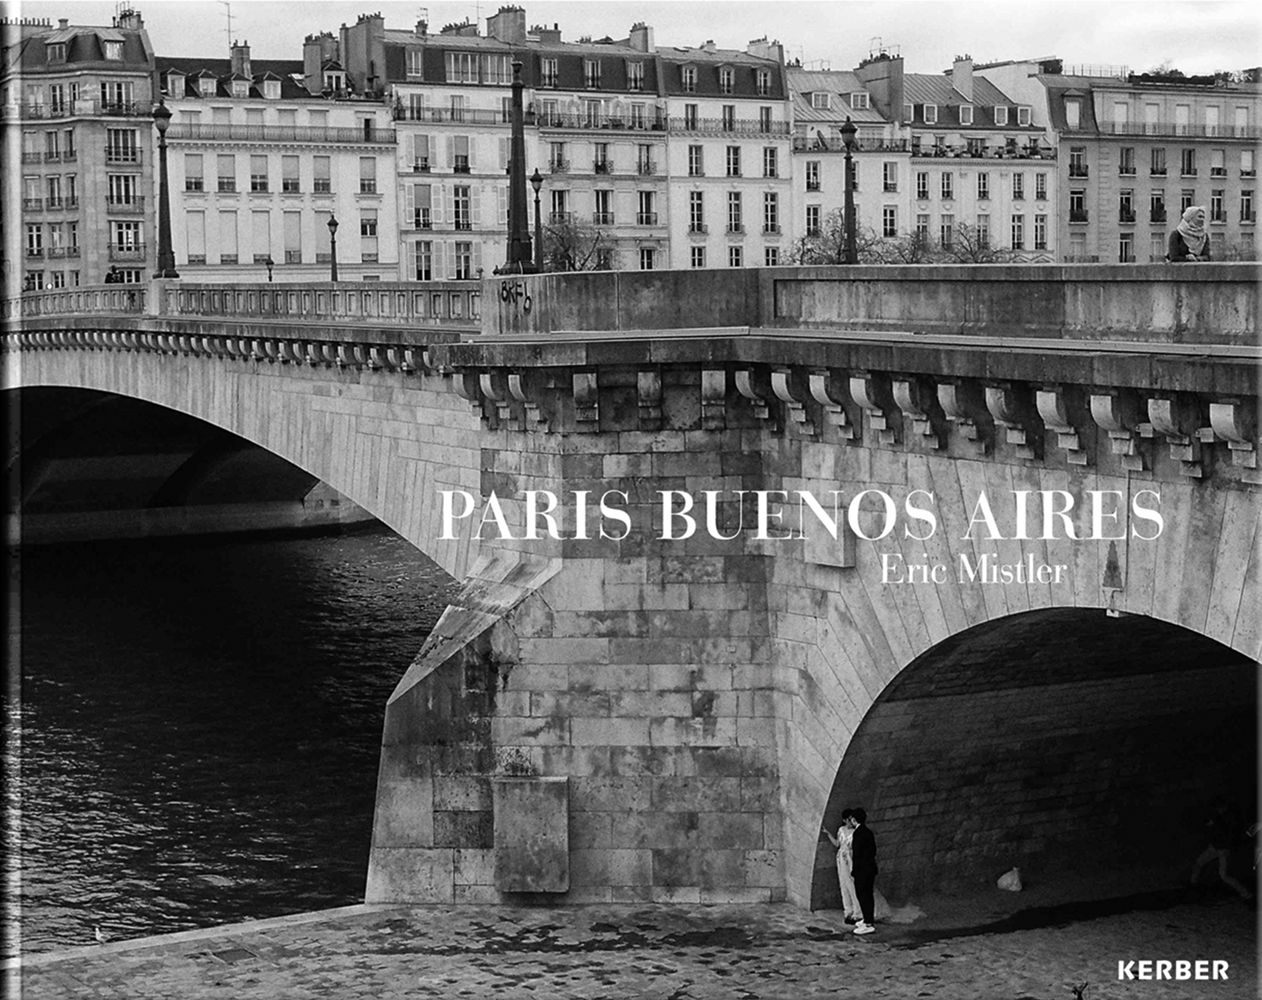 River Seine bridge with couple embracing beneath, PARIS BUENOS AIRES Eric Mistler in white font to centre.